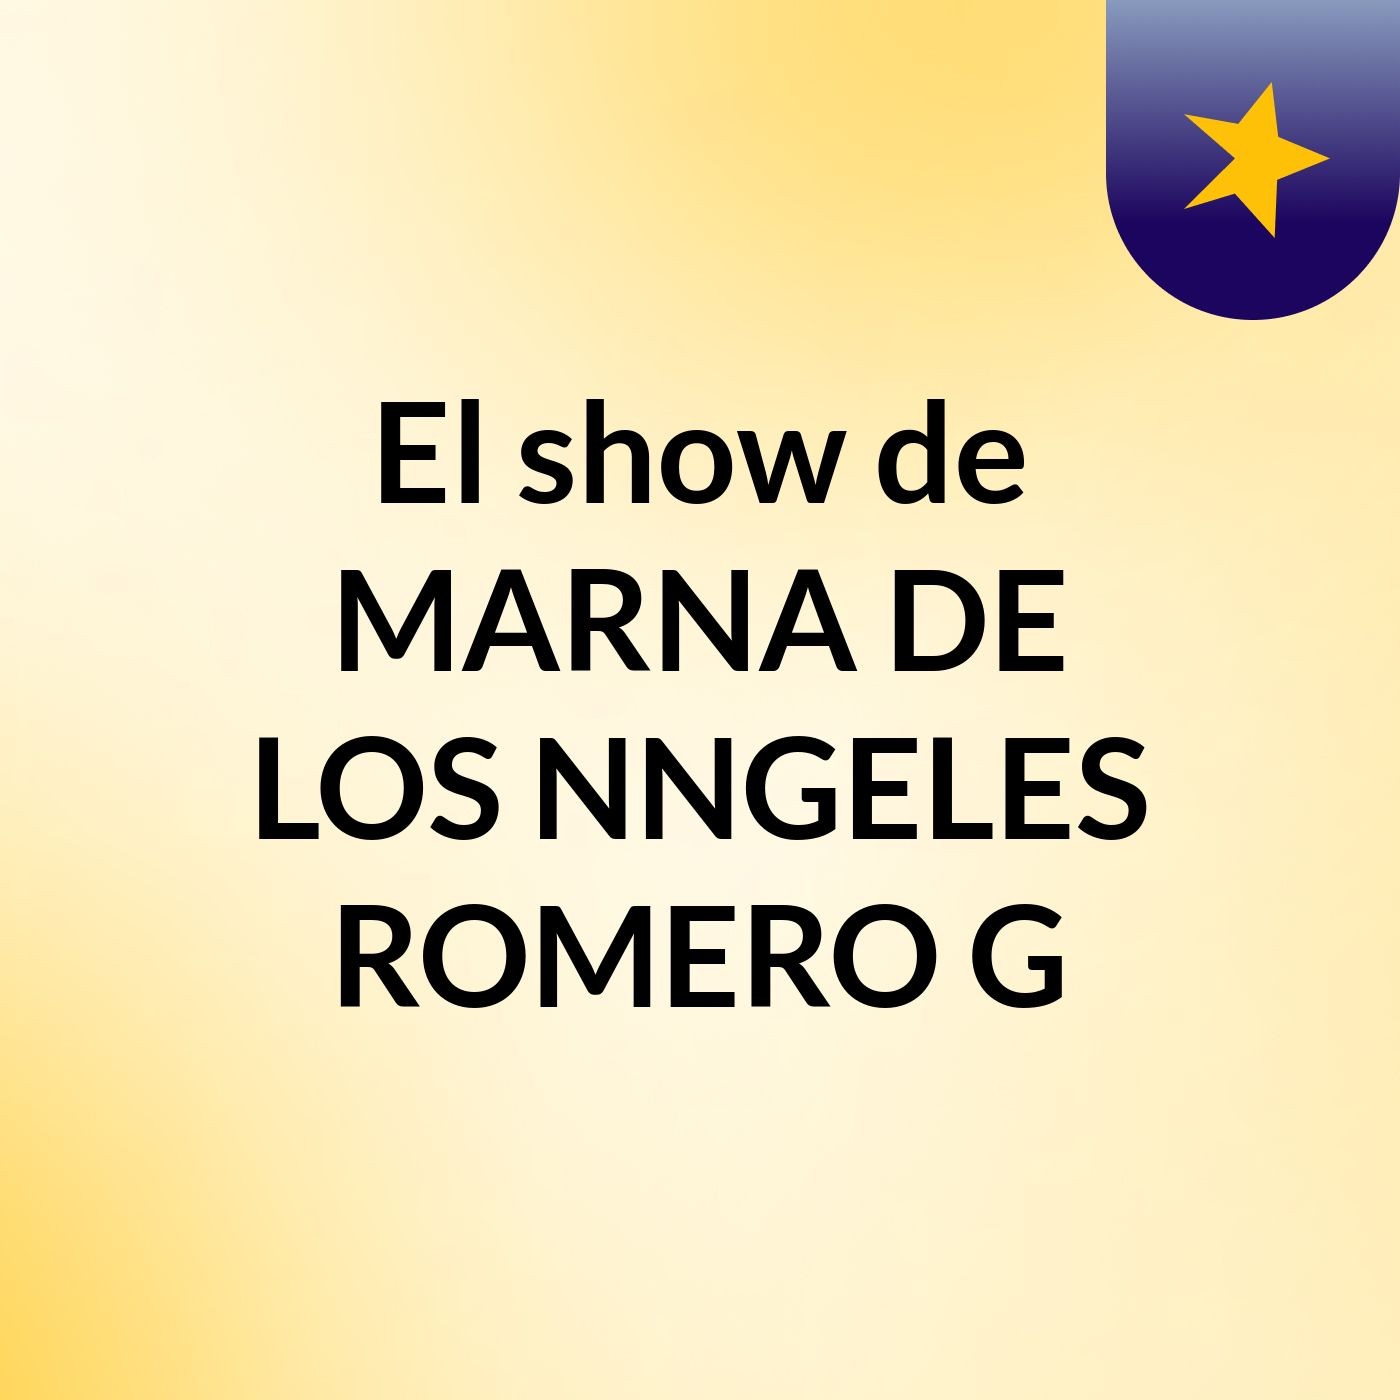 El show de MARNA DE LOS NNGELES ROMERO G